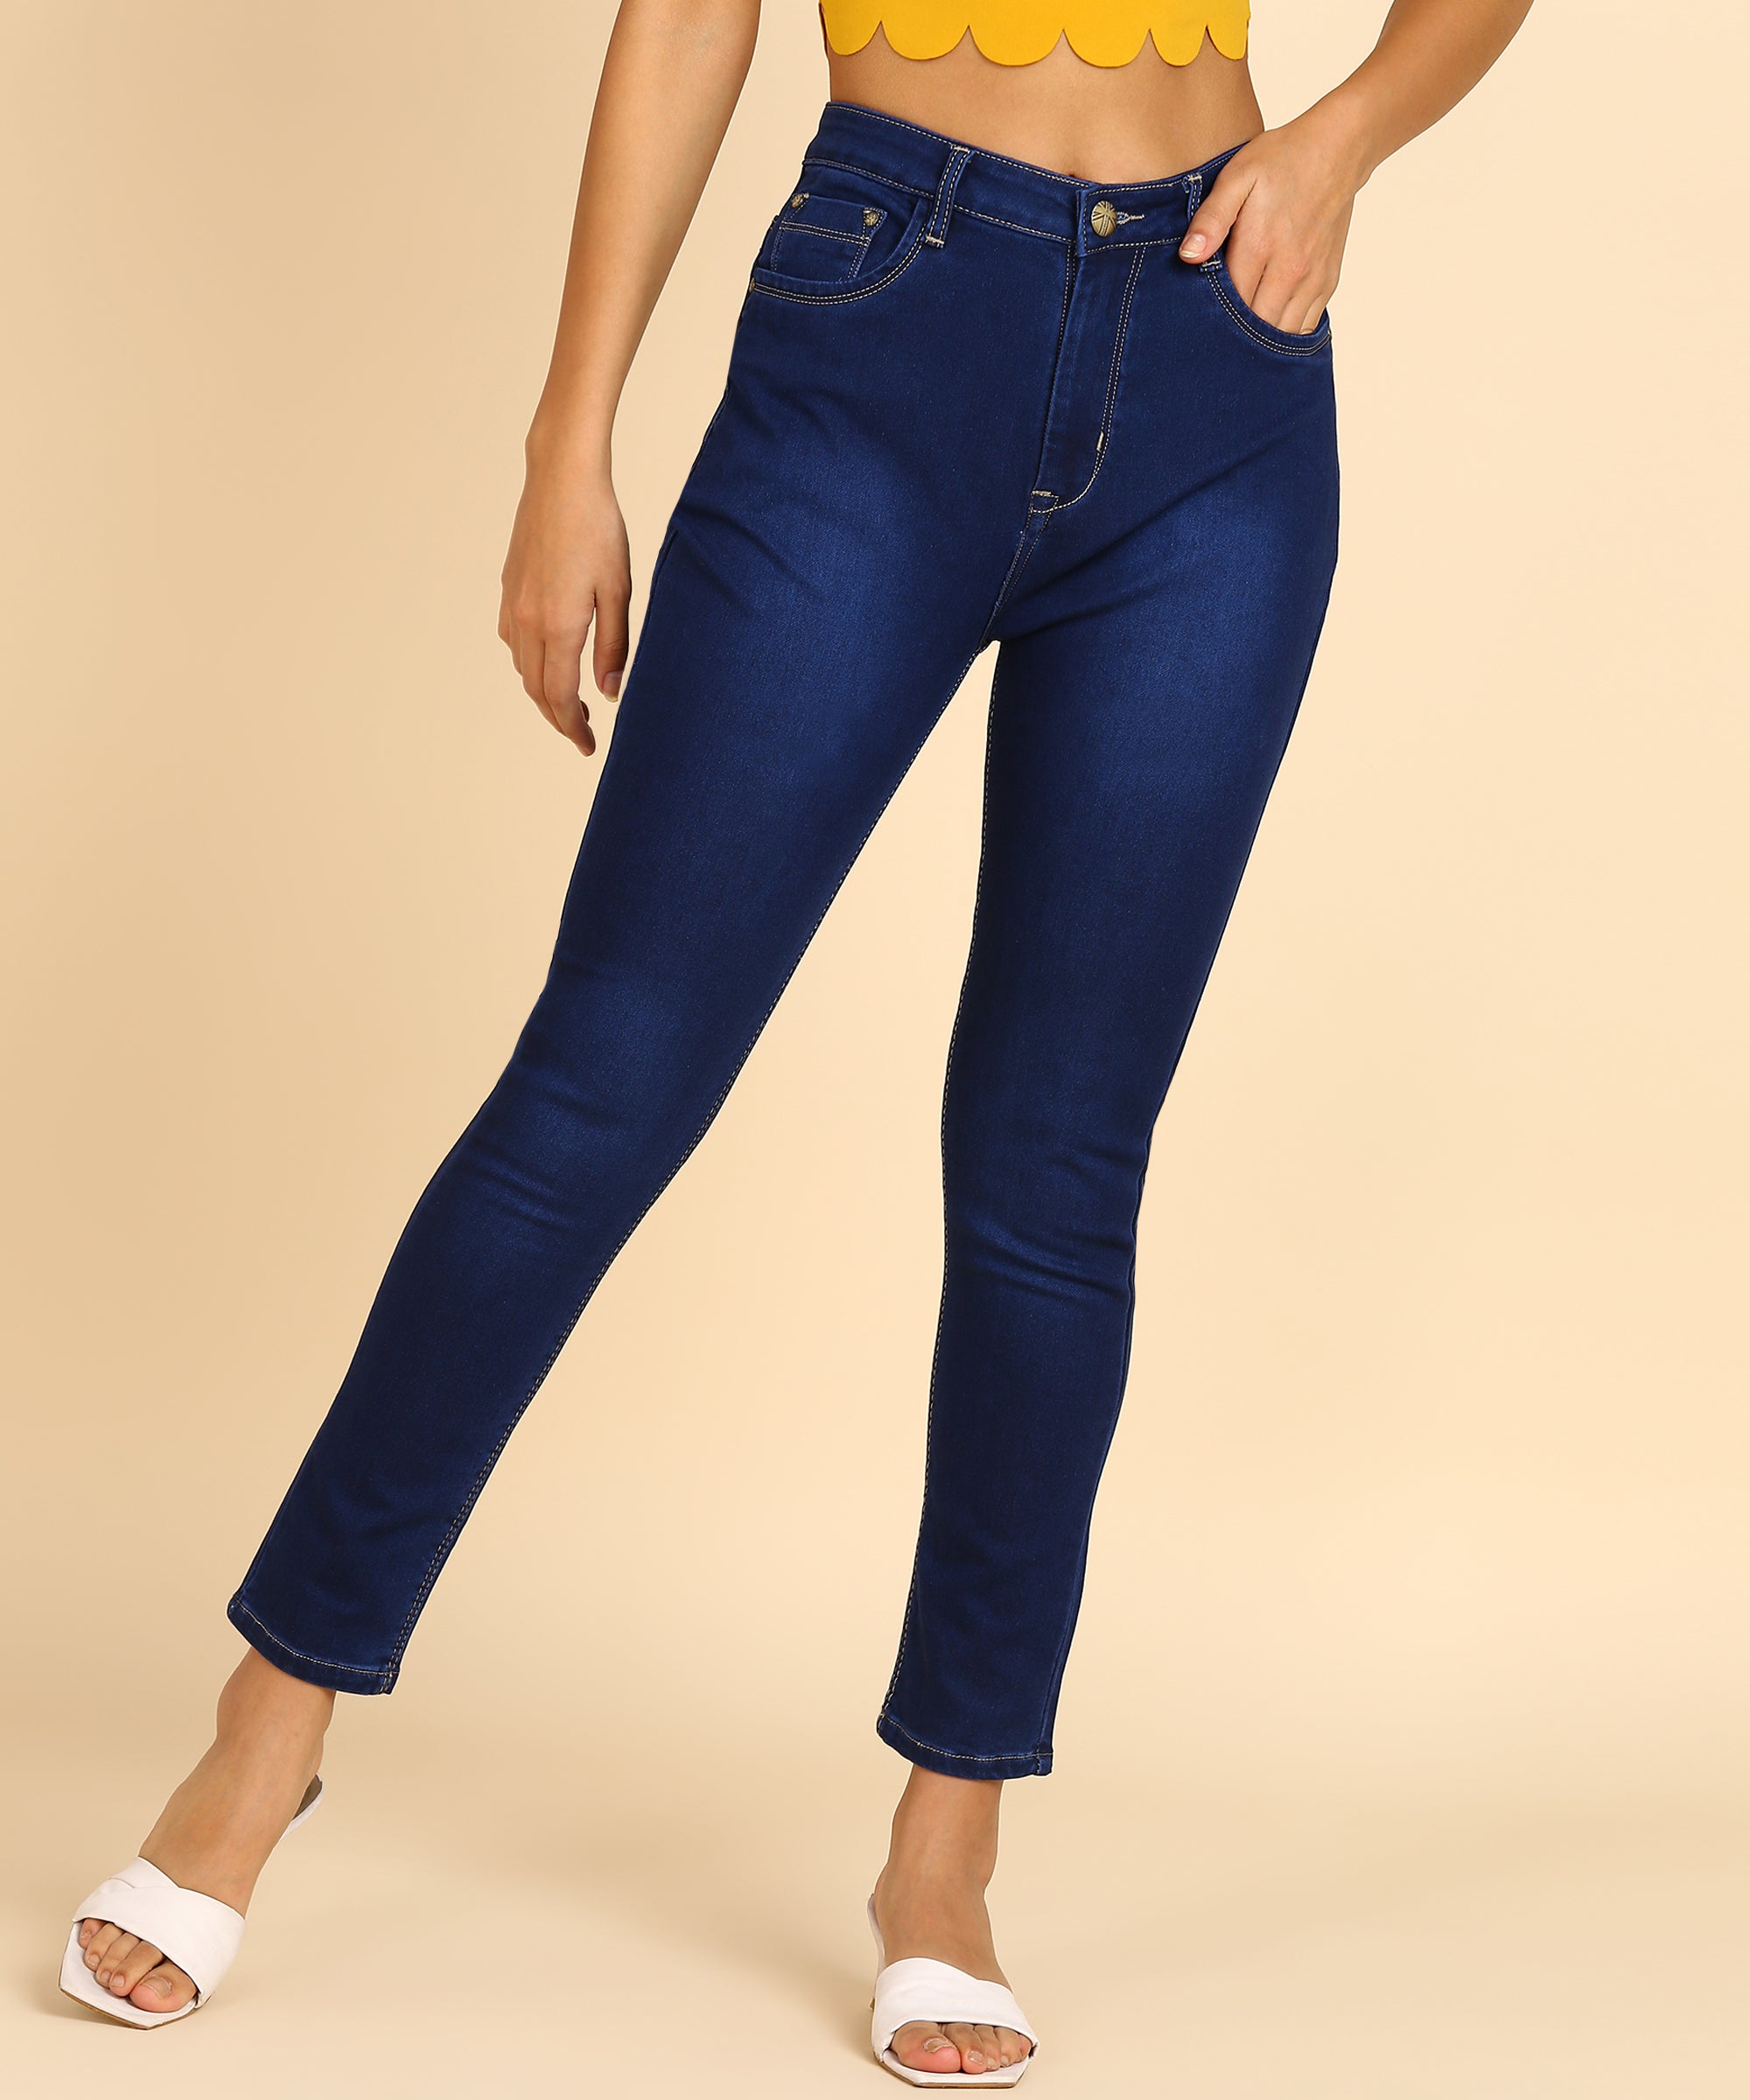 Four Ways To Make High Waist Skinny Jeans Slimming - Sydne Style